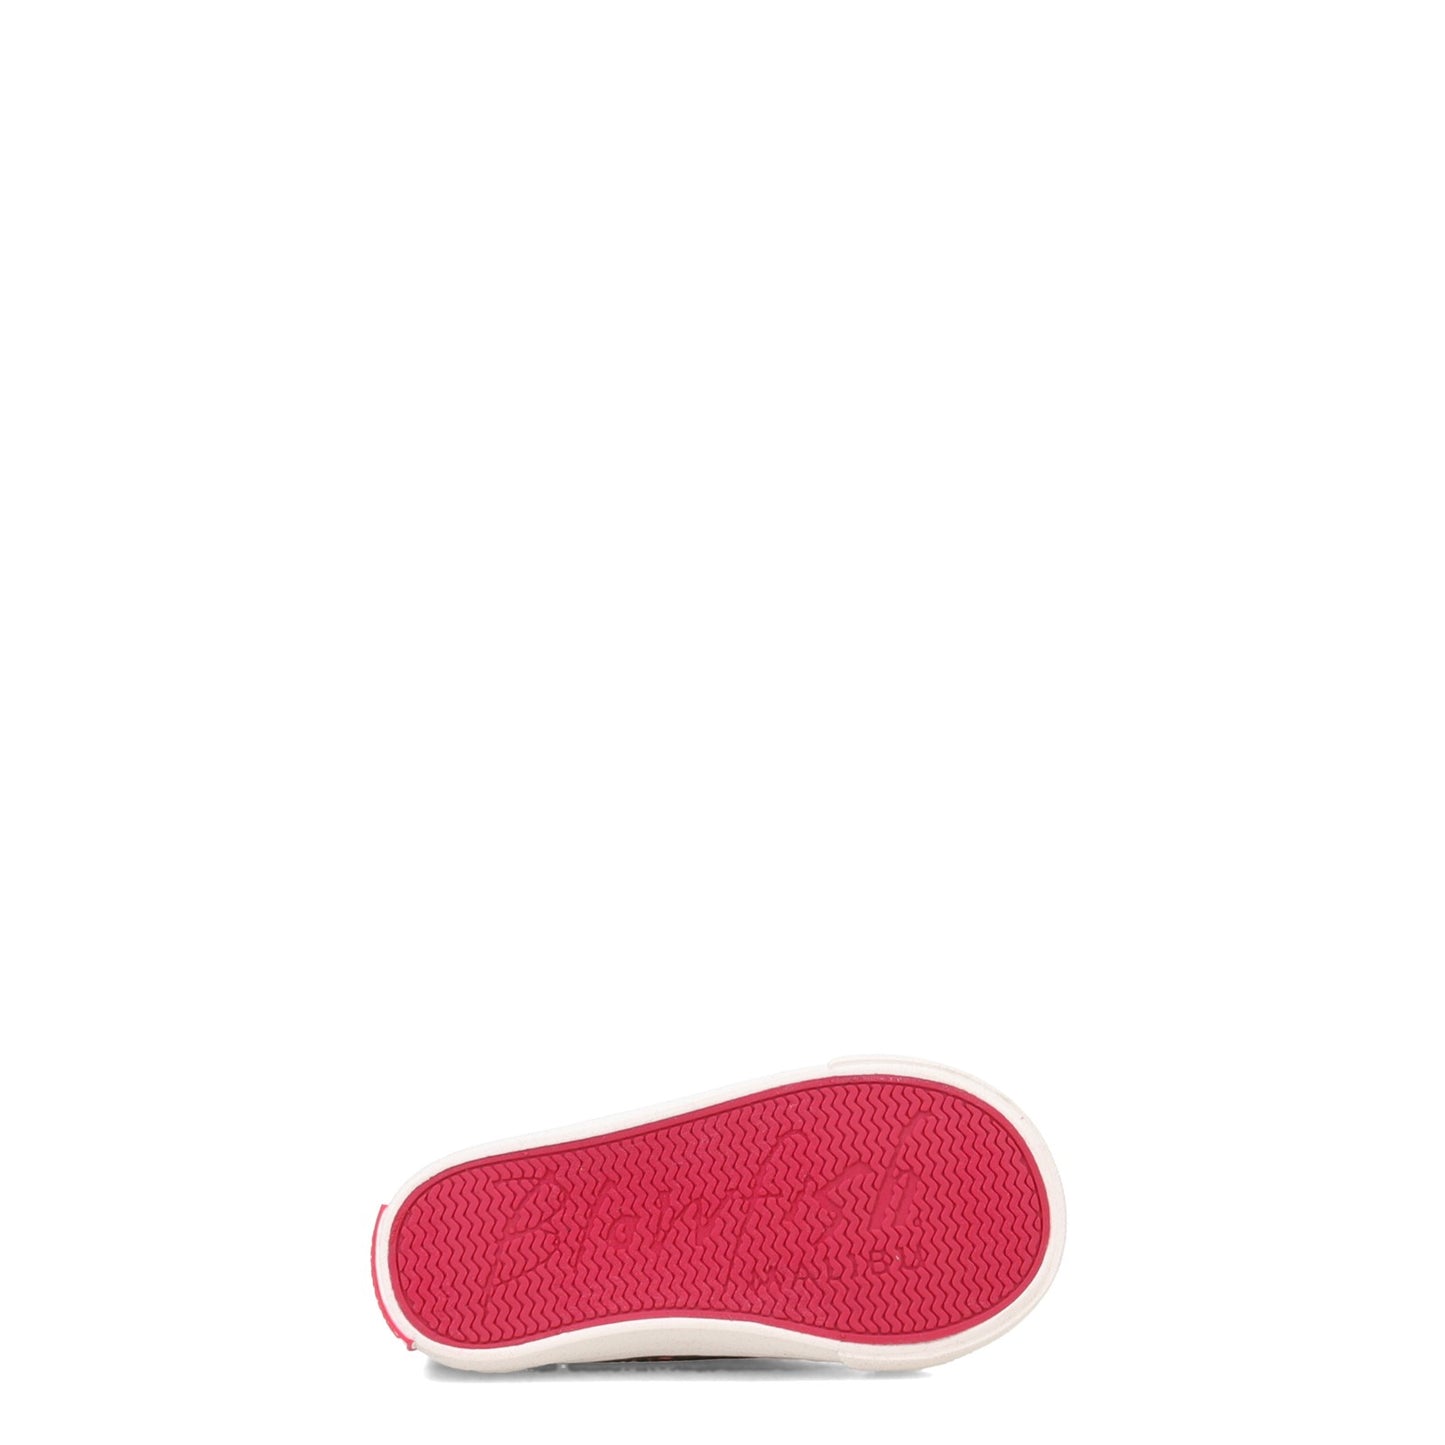 Peltz Shoes  Girl's Blowfish Malibu Playwire Sneaker - Toddler & Little Kid PINK ROCKSTAR ZS-0325T PIKRS